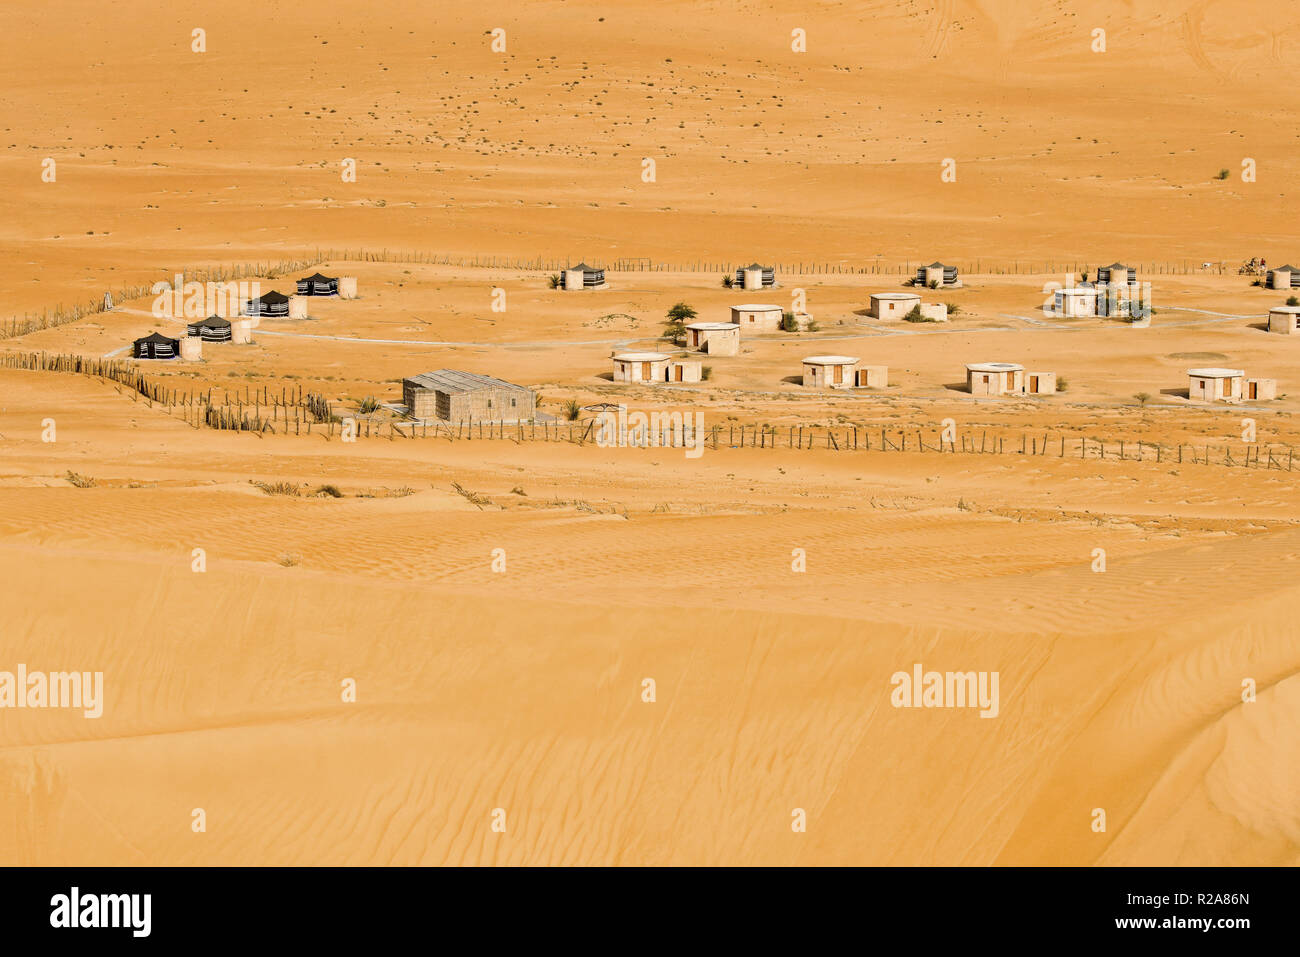 Elevated view of Safari Desert Camp in Wahiba Desert, Oman. Stock Photo